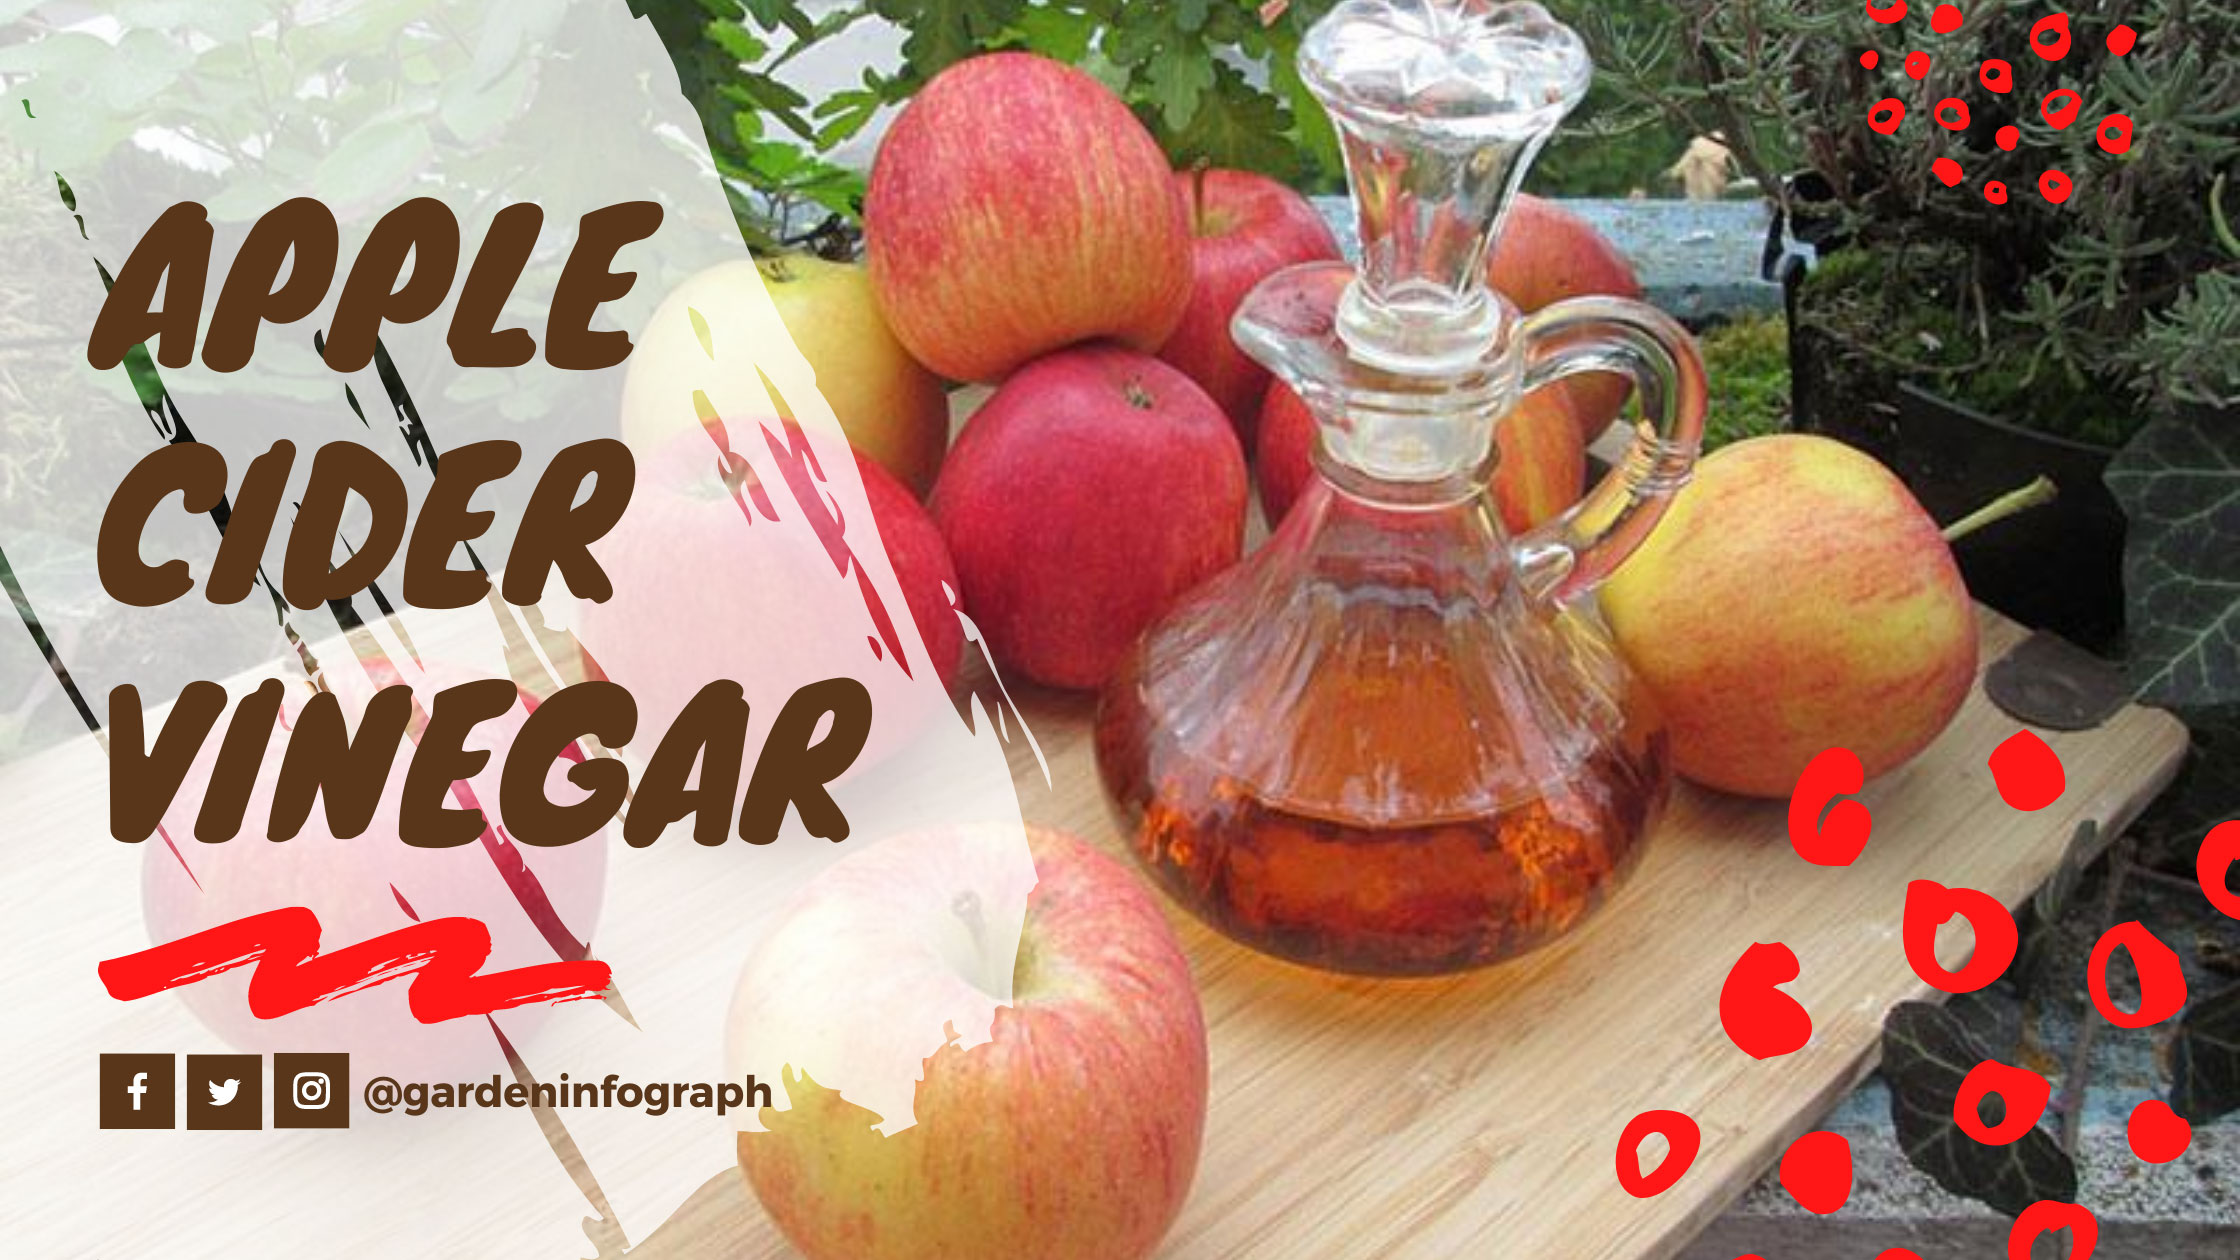 Apple Cider Vinegar: Health Benefits